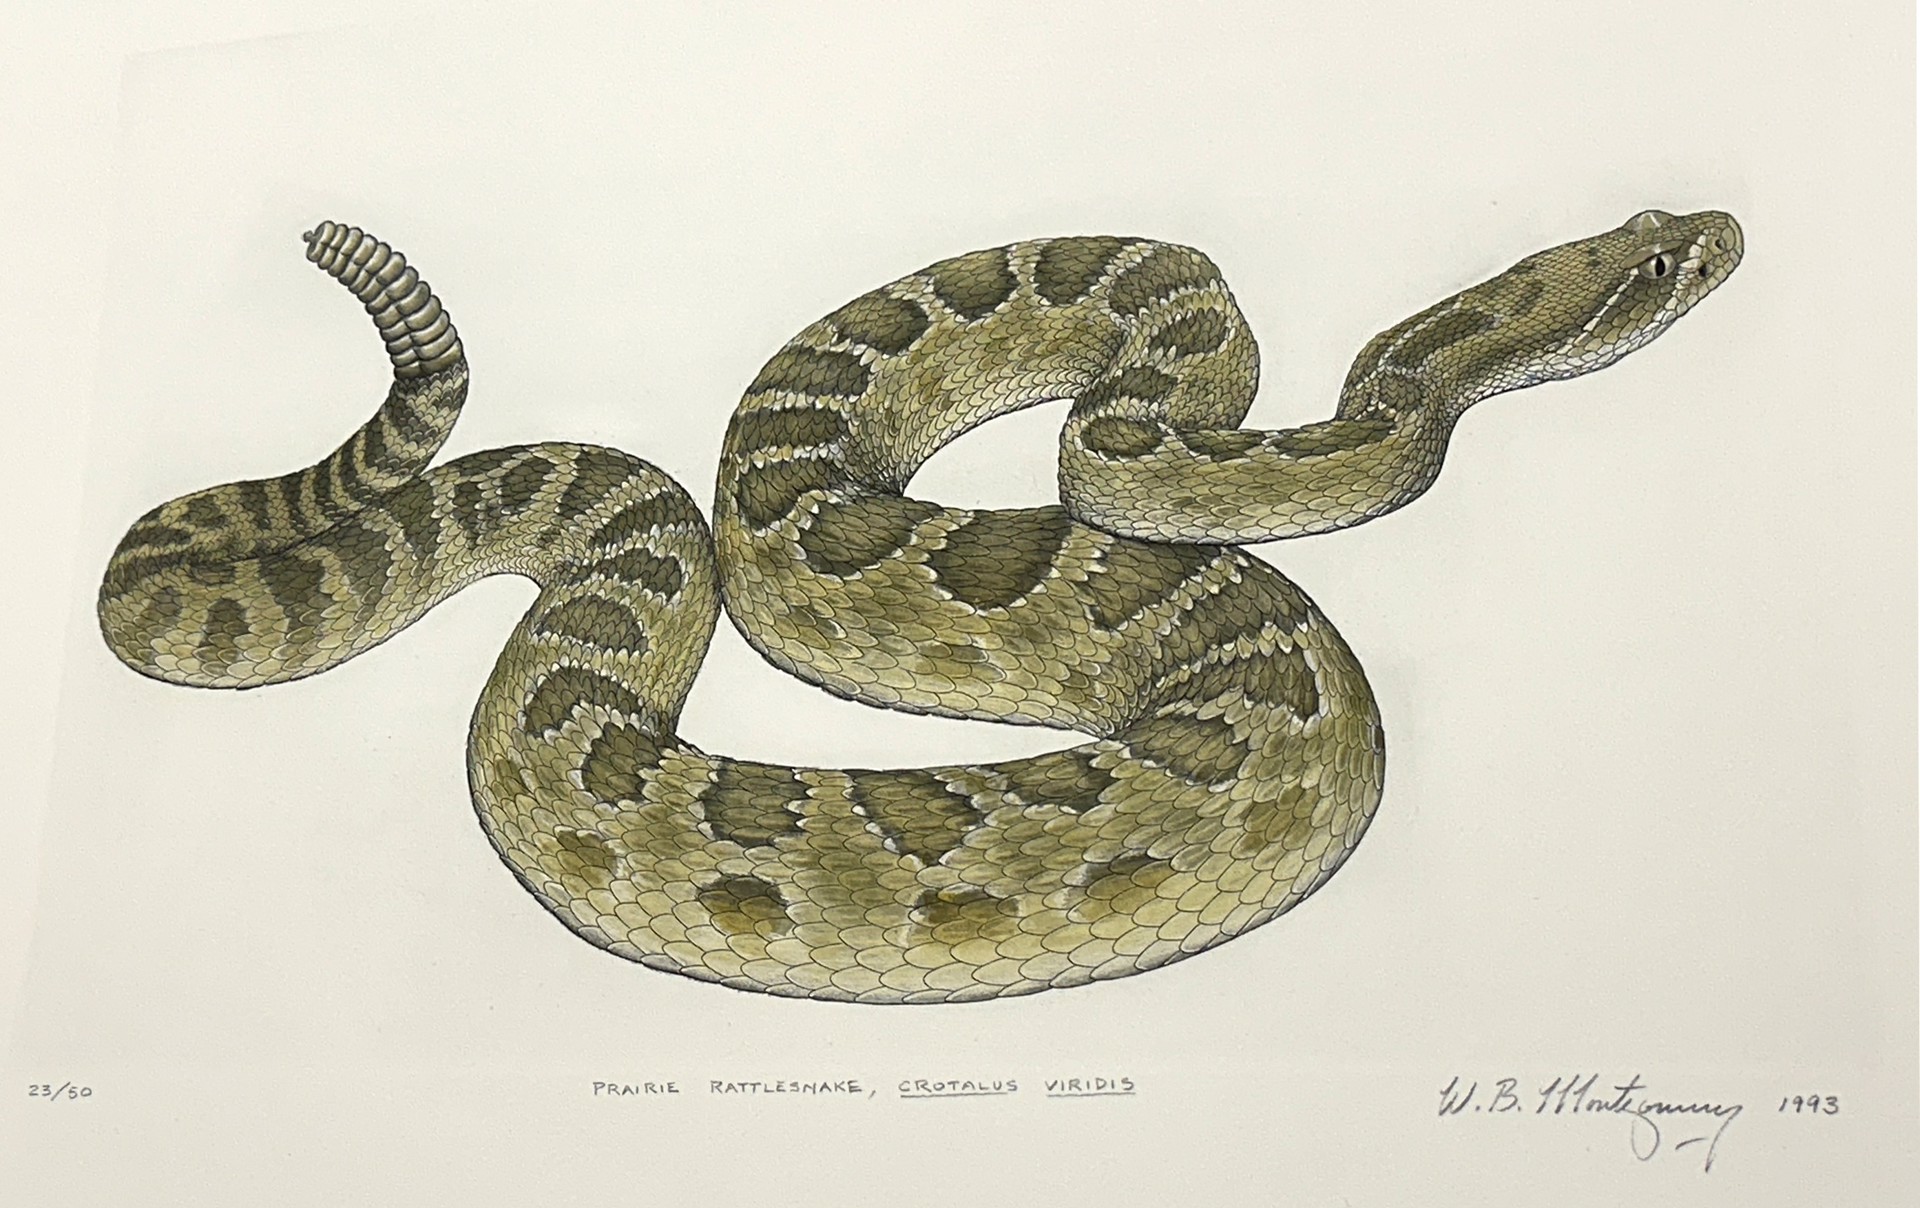 Prairie Rattlesnake by William Montgomery